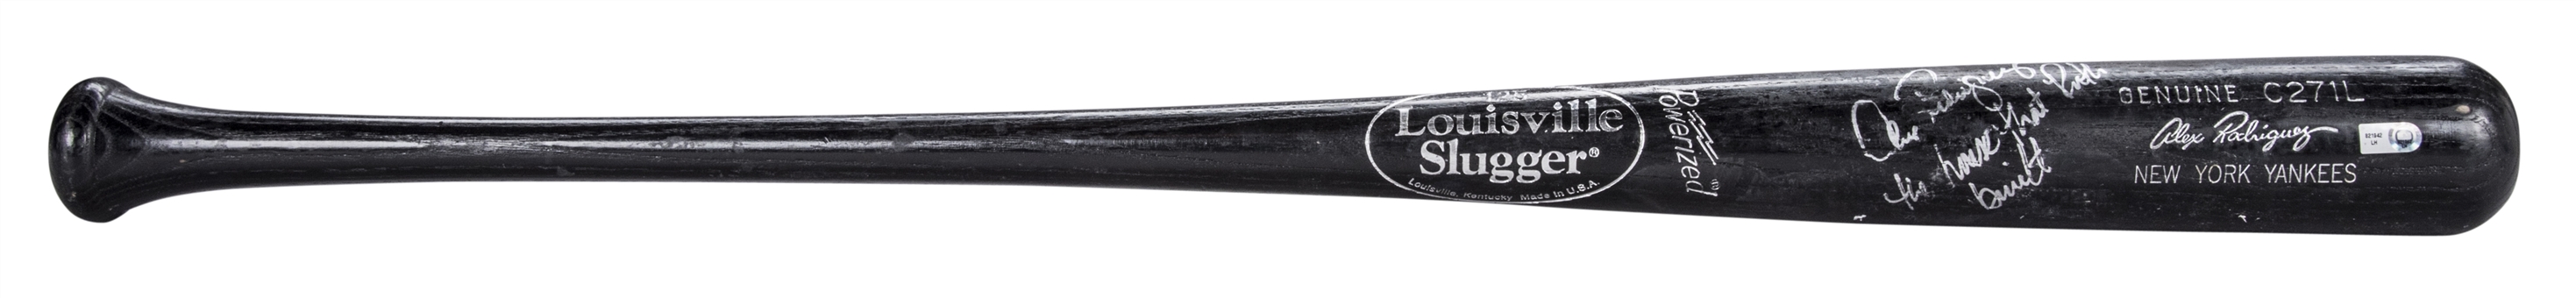 2008 Alex Rodriguez Game Used and Signed Louisville Slugger C271L Model Bat (PSA/DNA GU 8 & MLB Authenticated)